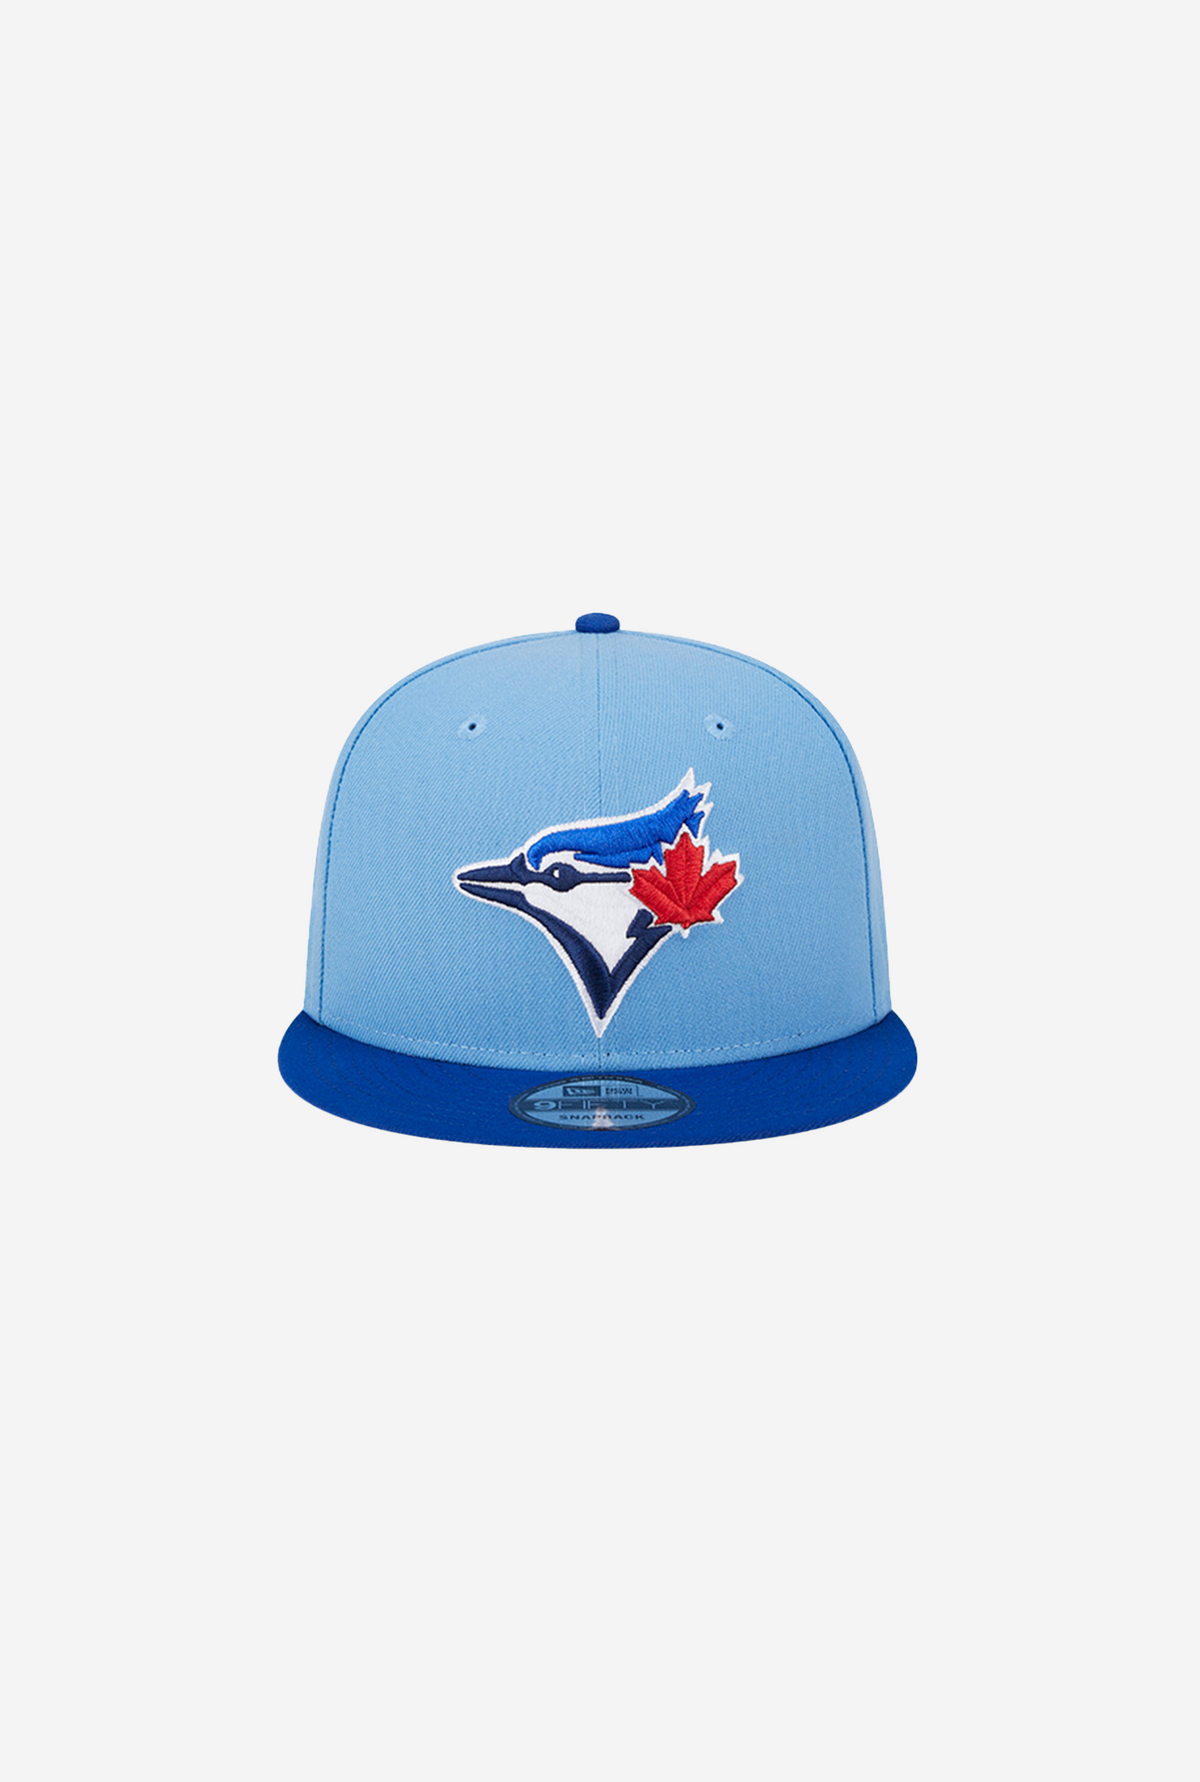 Toronto Blue Jays Spring Training 9FIFTY Hat